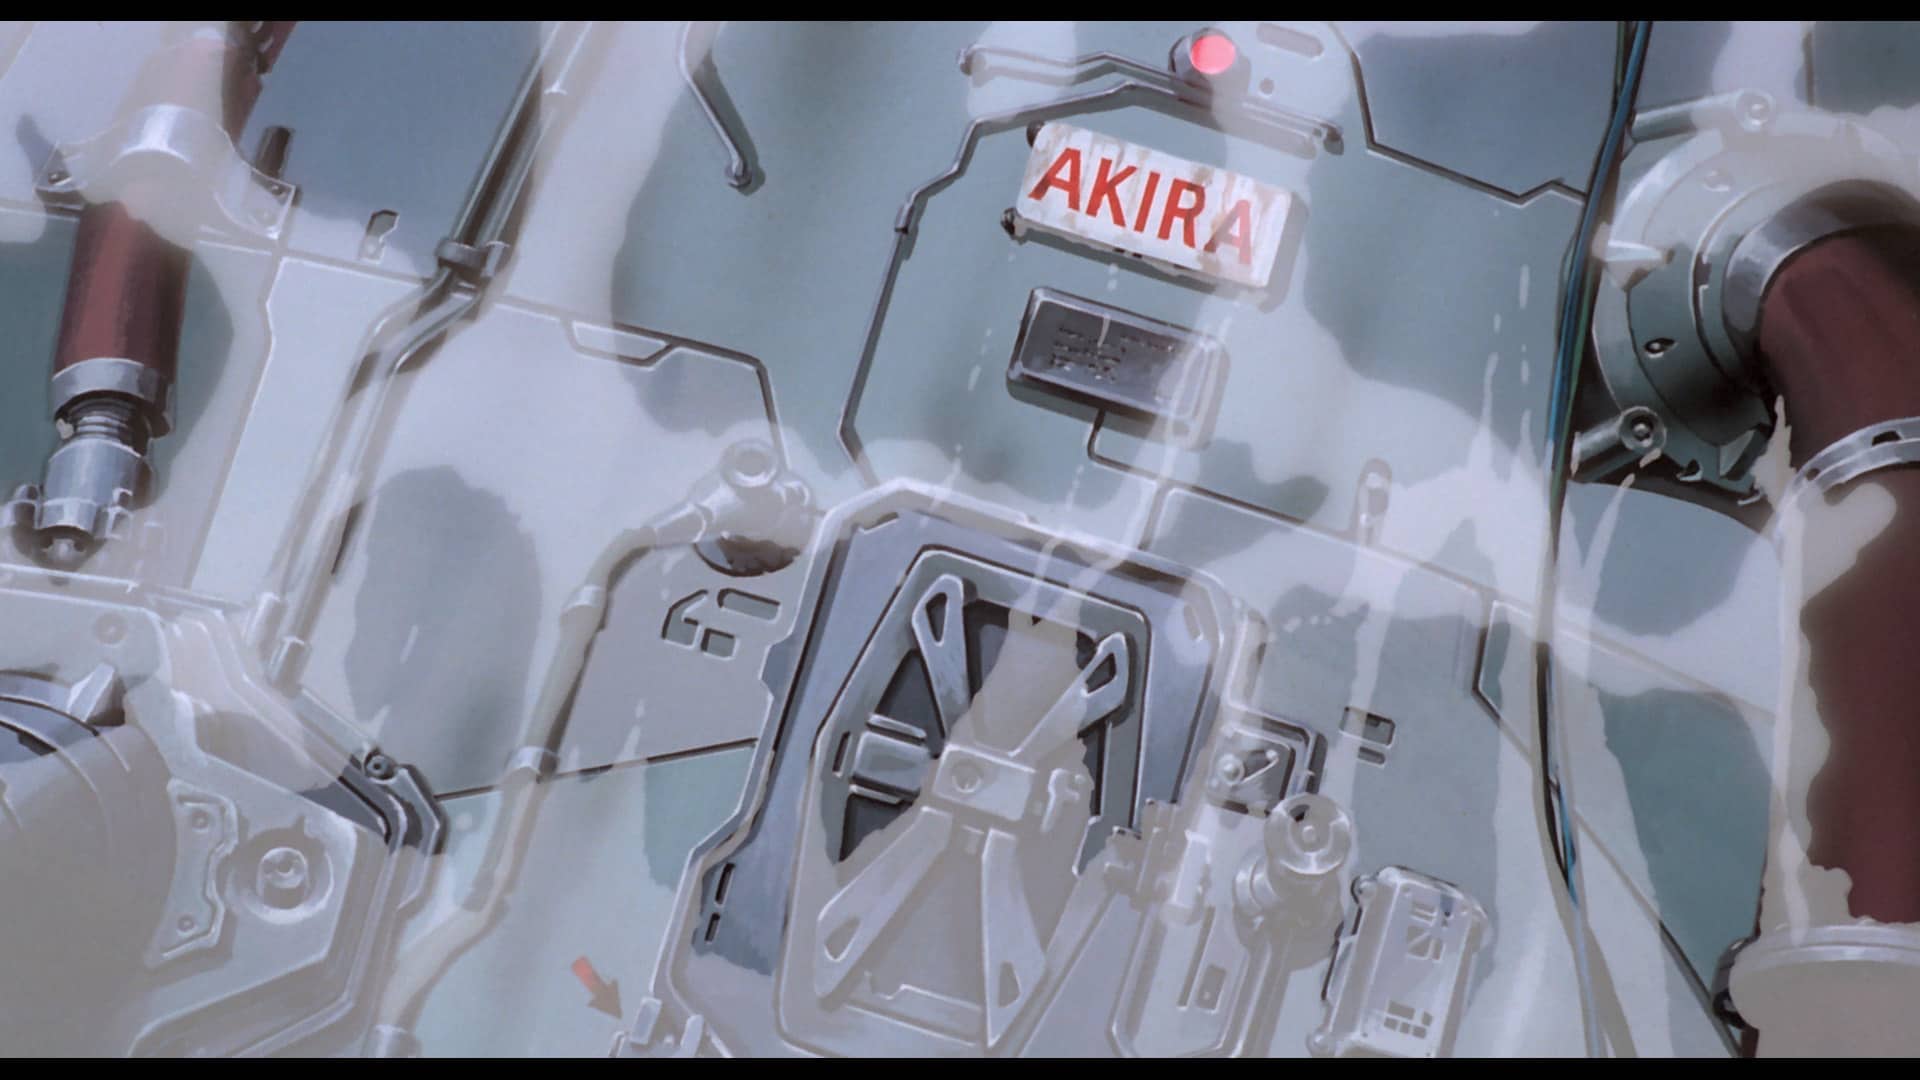 Akira cinema 4k